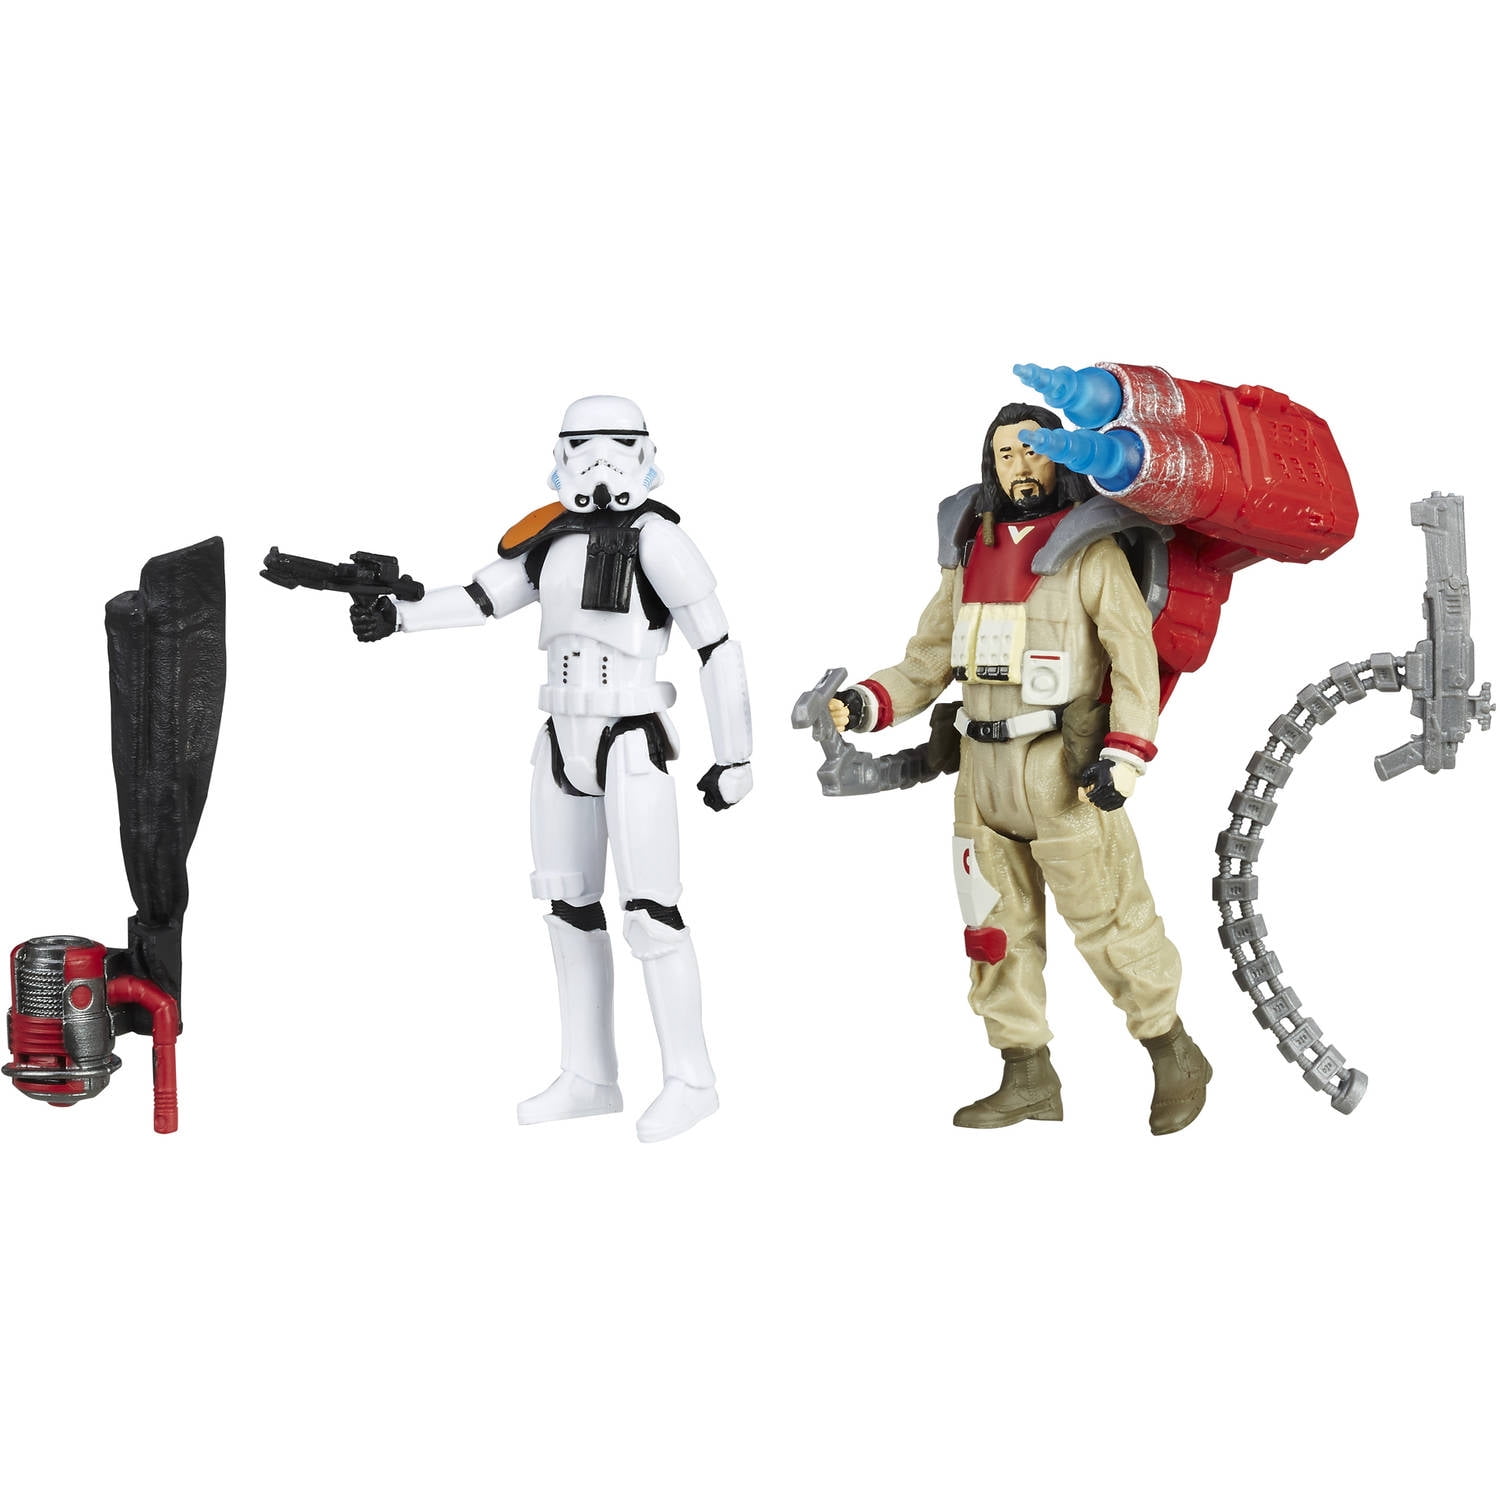 Star Wars STAP Battle Droid Super Battle Droid Custom Army Set 18pcs